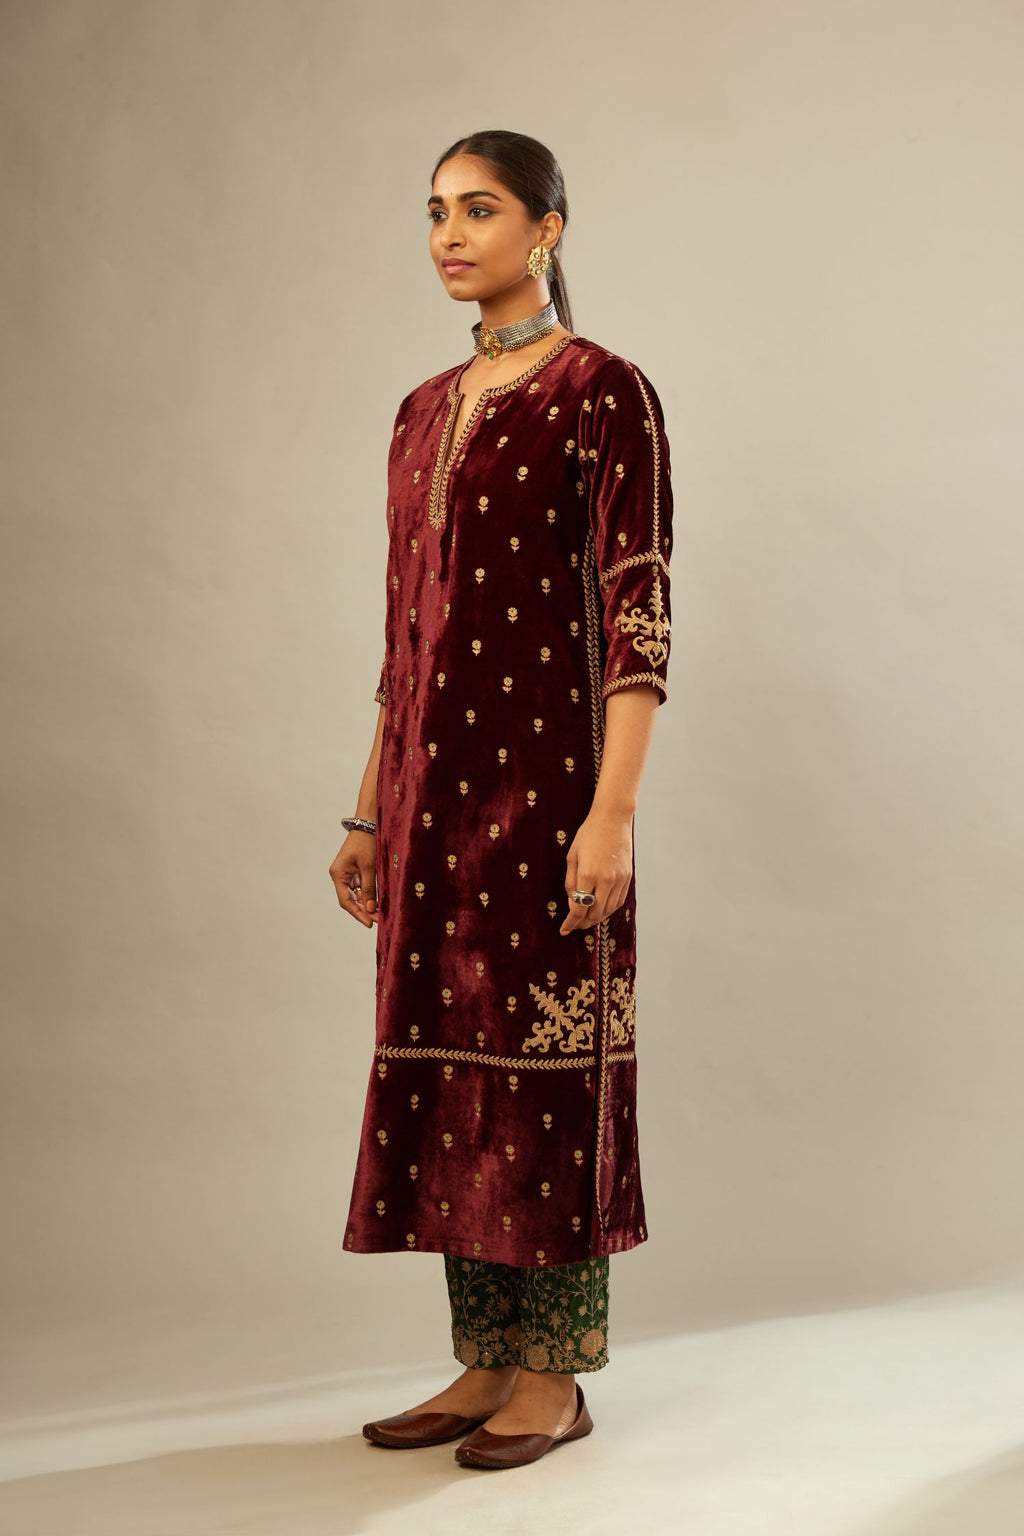 Maroon silk velvet straight kurta set with small zari embroidered booti all-over the kurta, detailed with dori embroidery border at edges